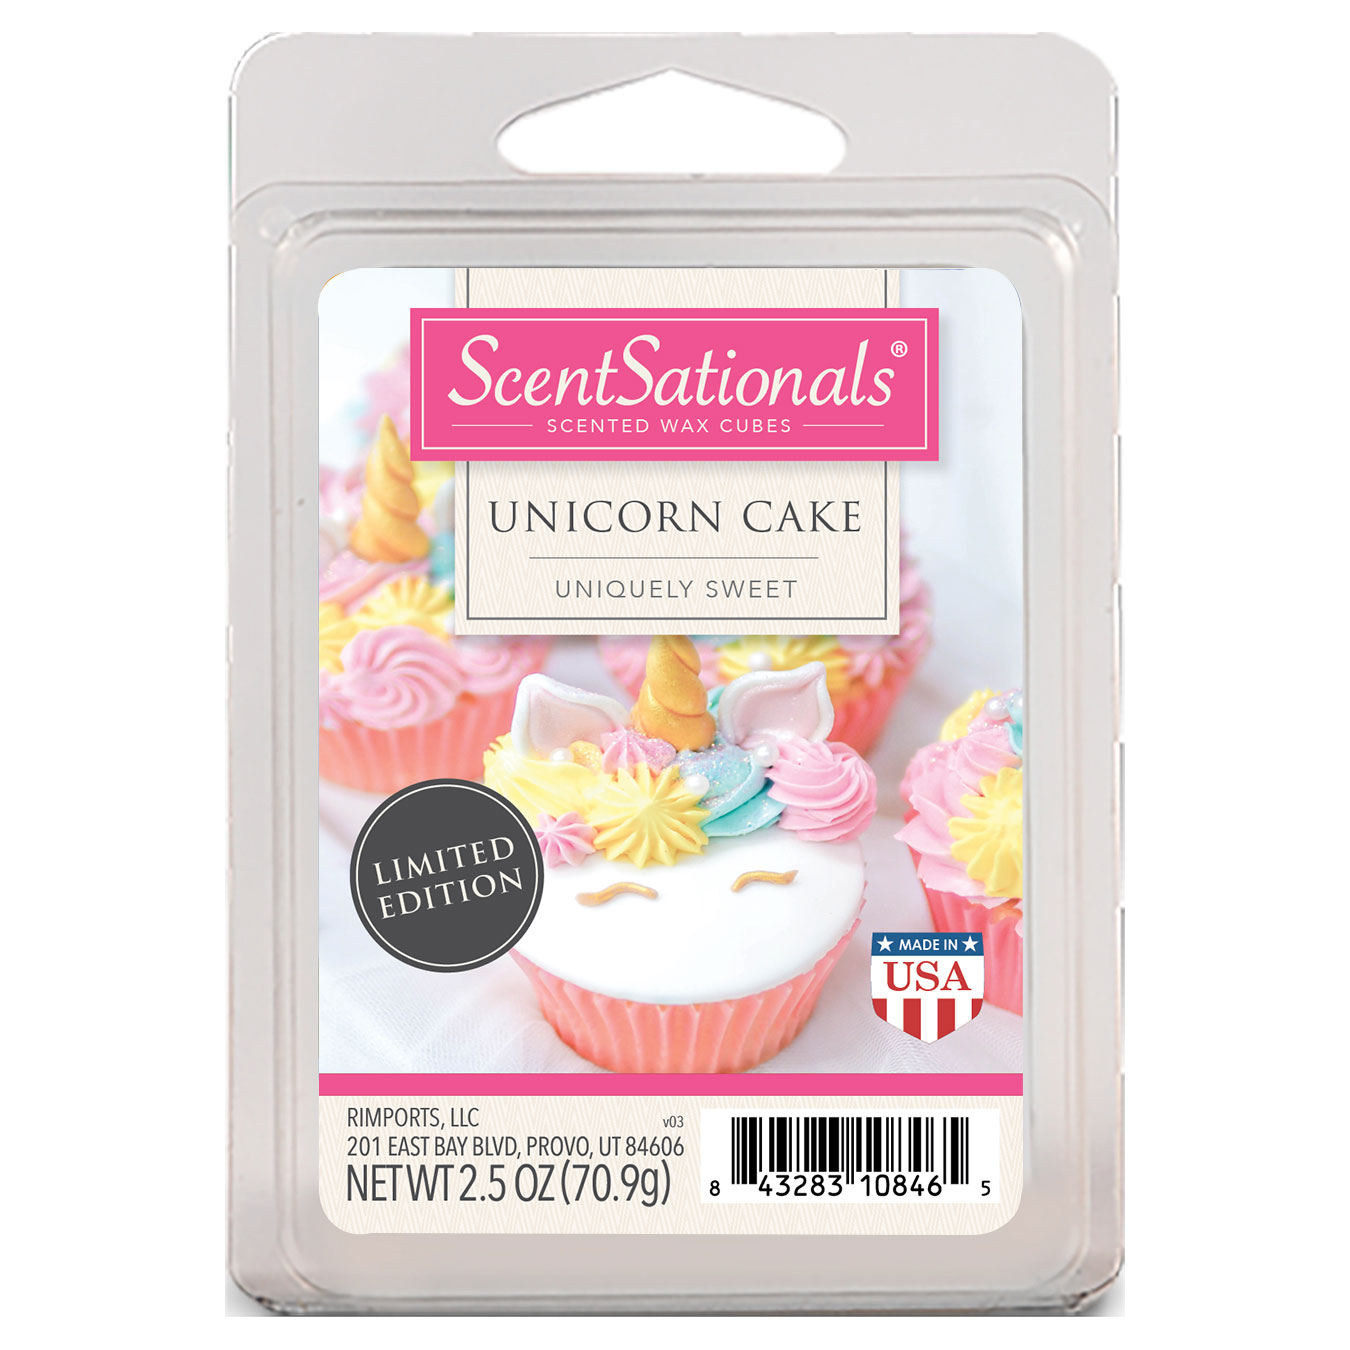 Unicorn Cake Scentsationals